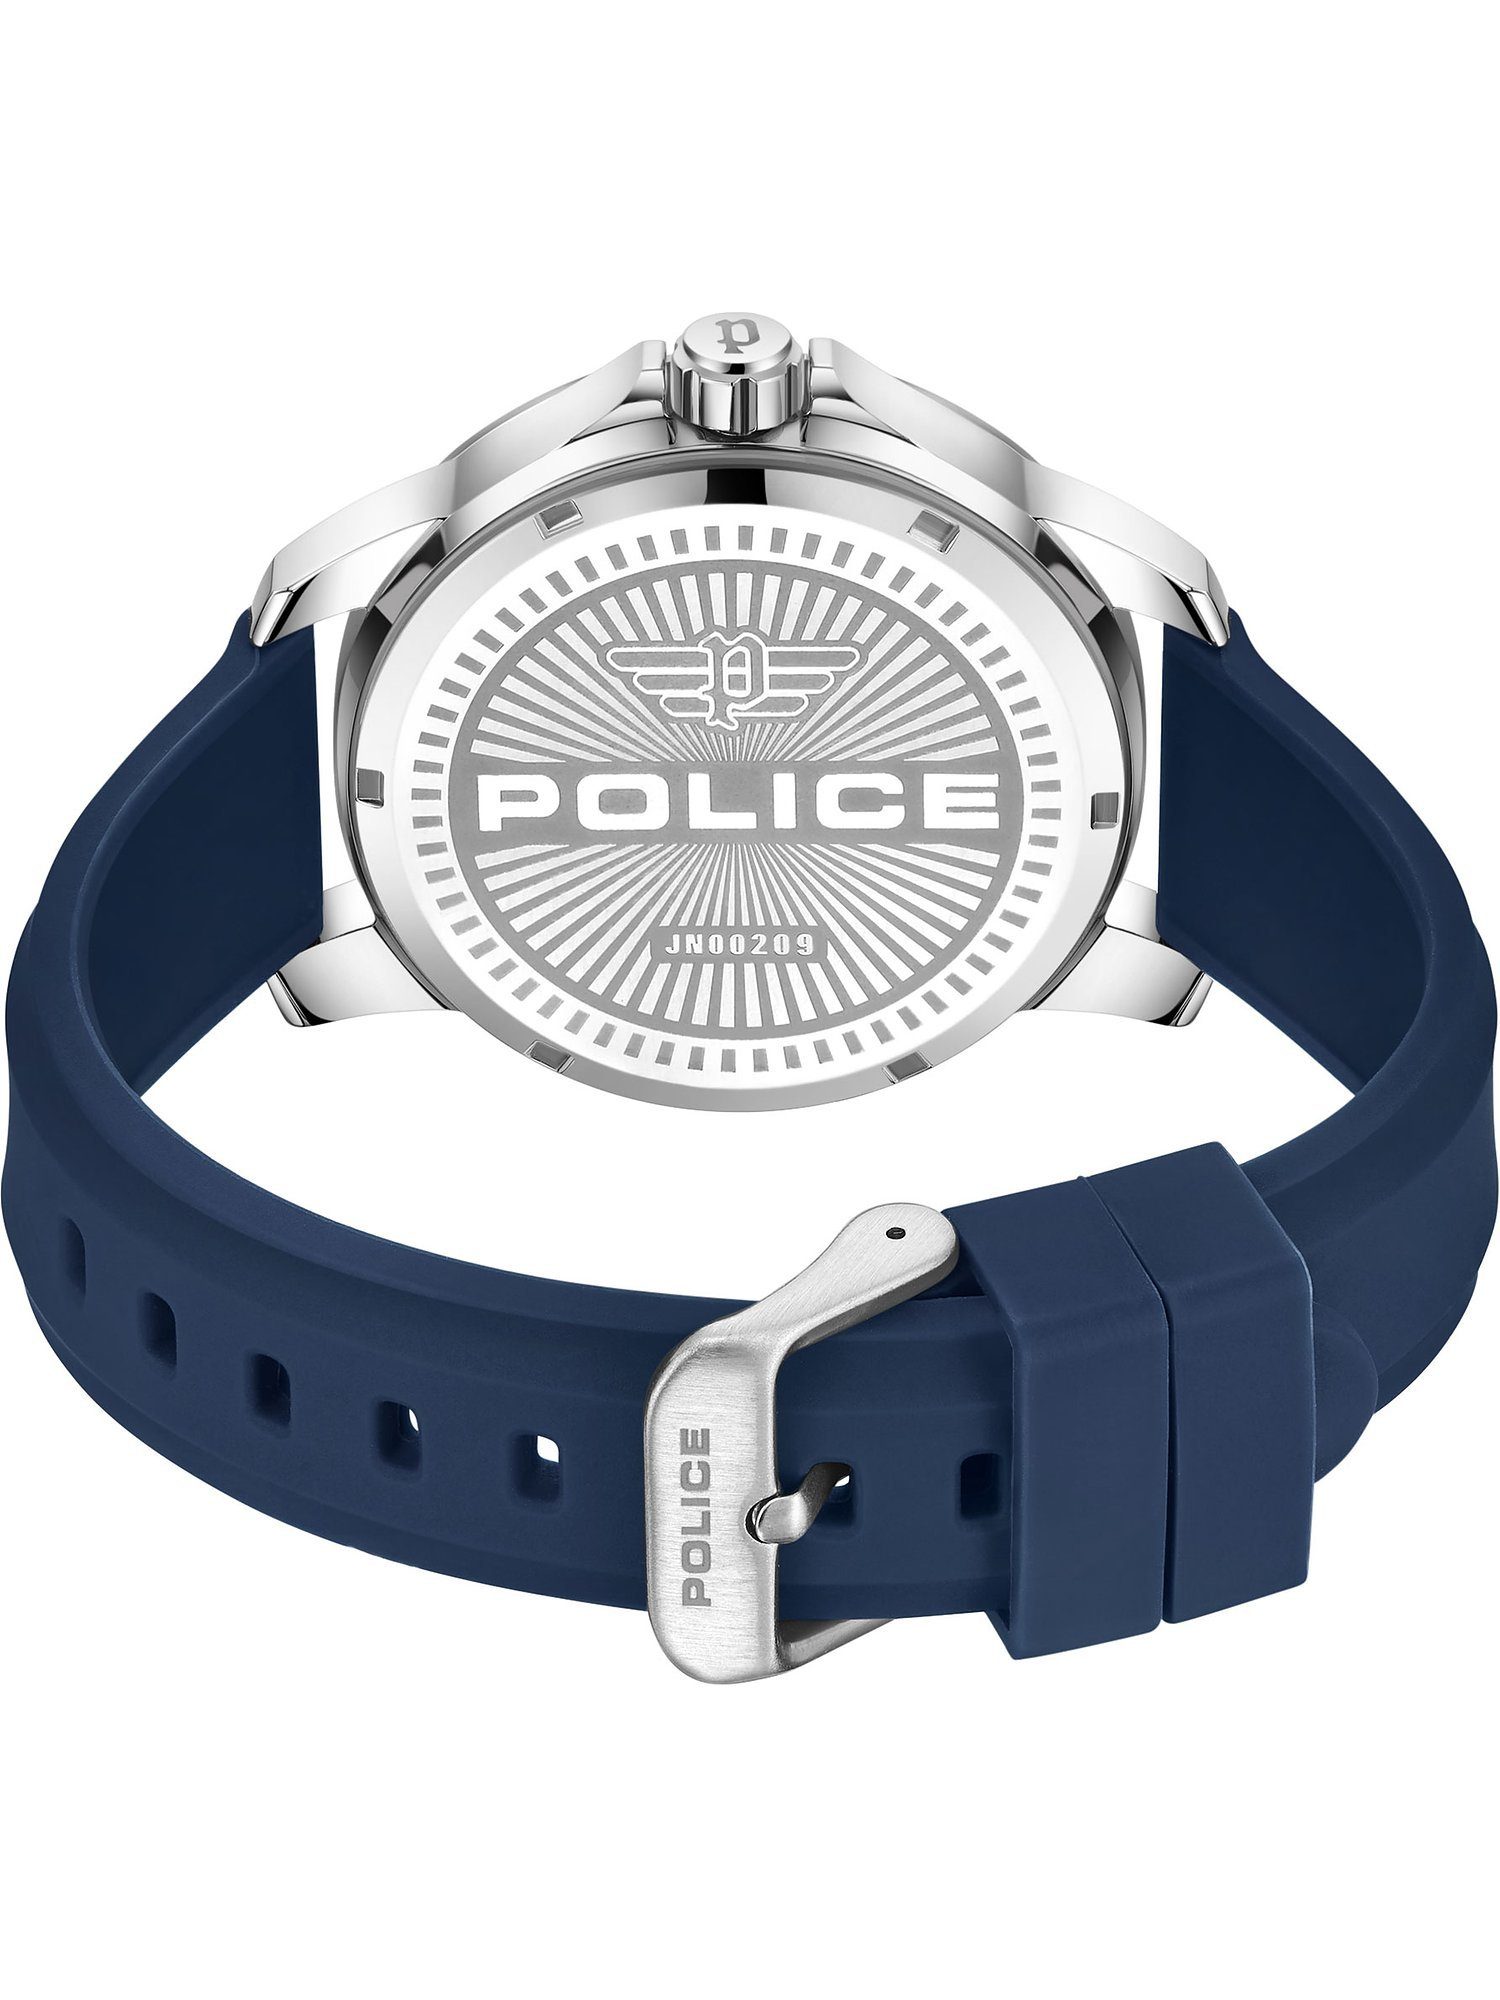 Police Quarzuhr Police Analog, Klassikuhr Herren-Uhren blau